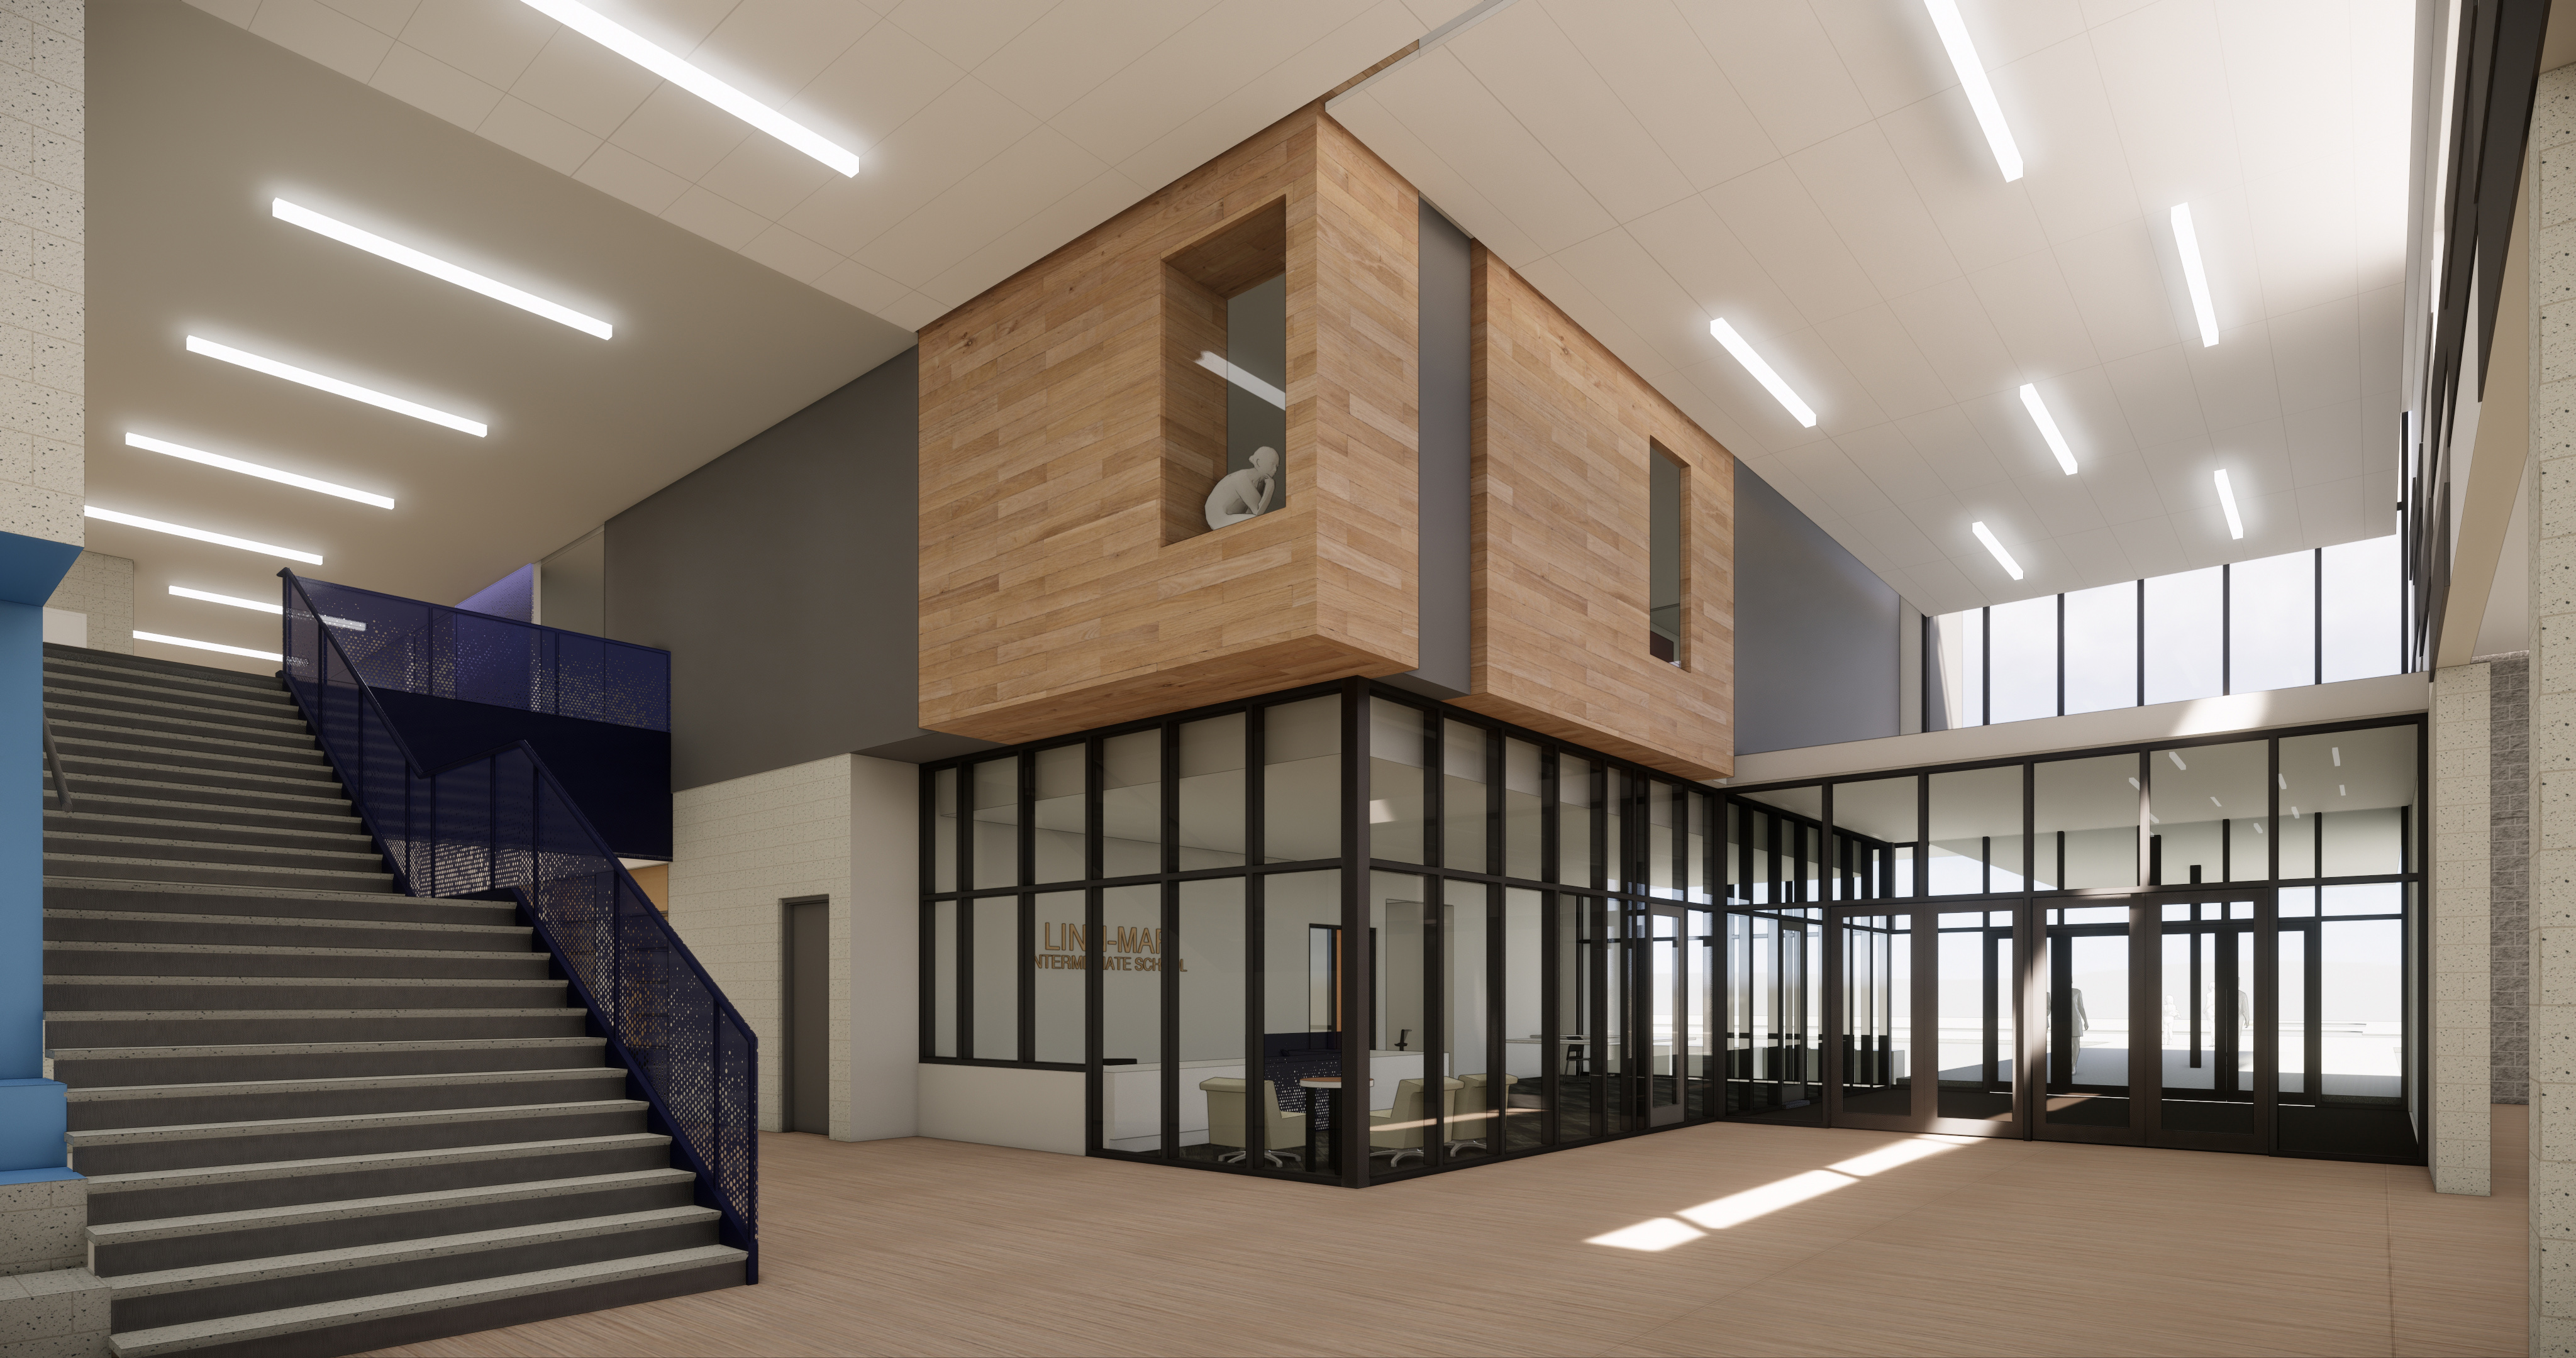 Linn-Mar Community Schools Facility Planning & Design - OPN Architects